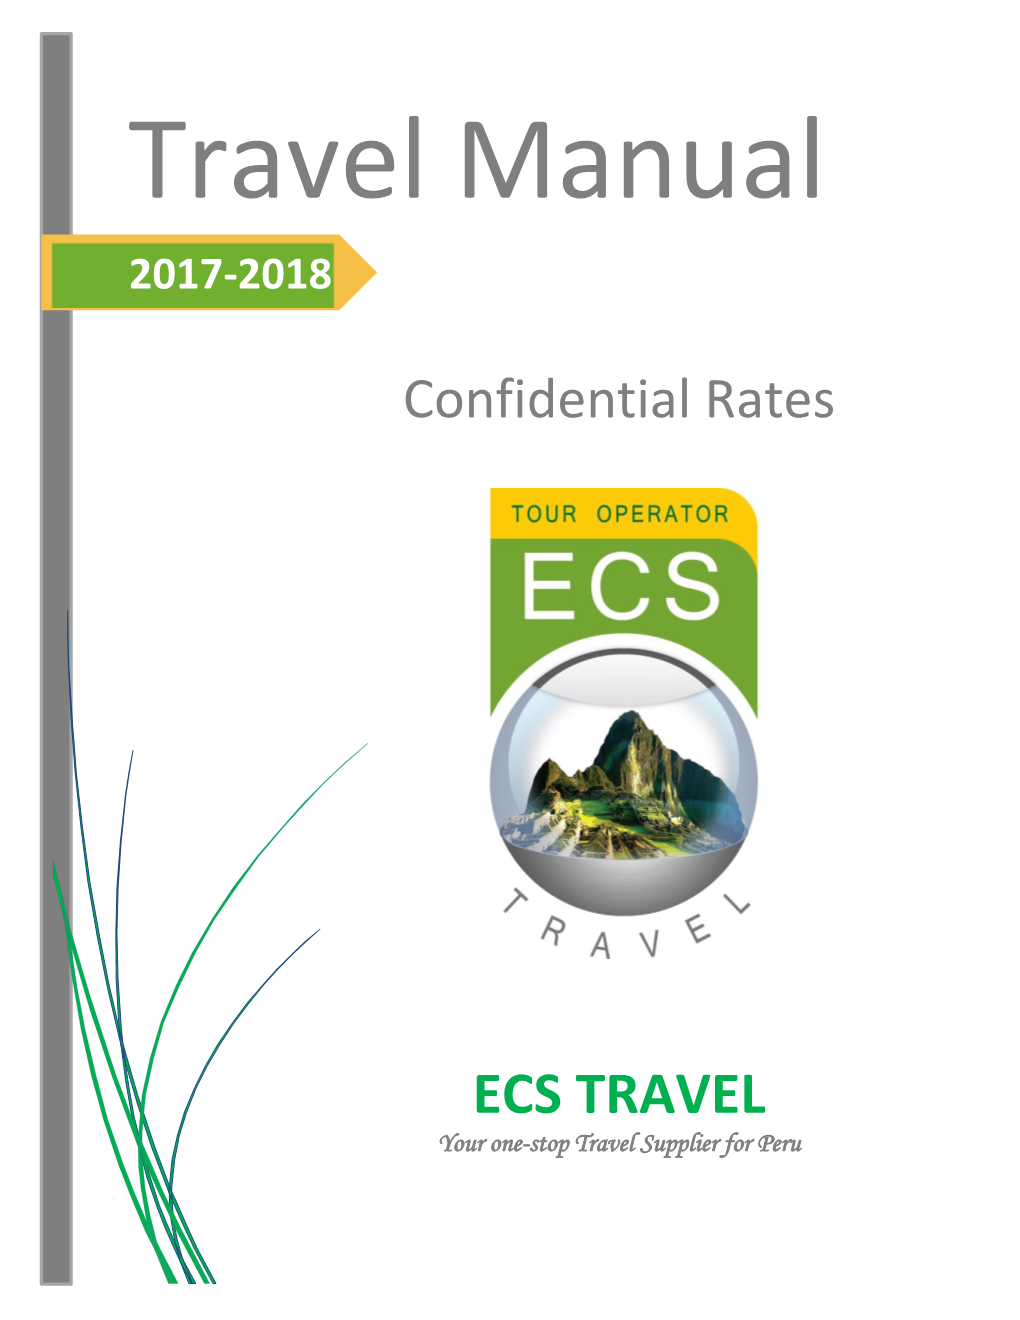 Travel Manual